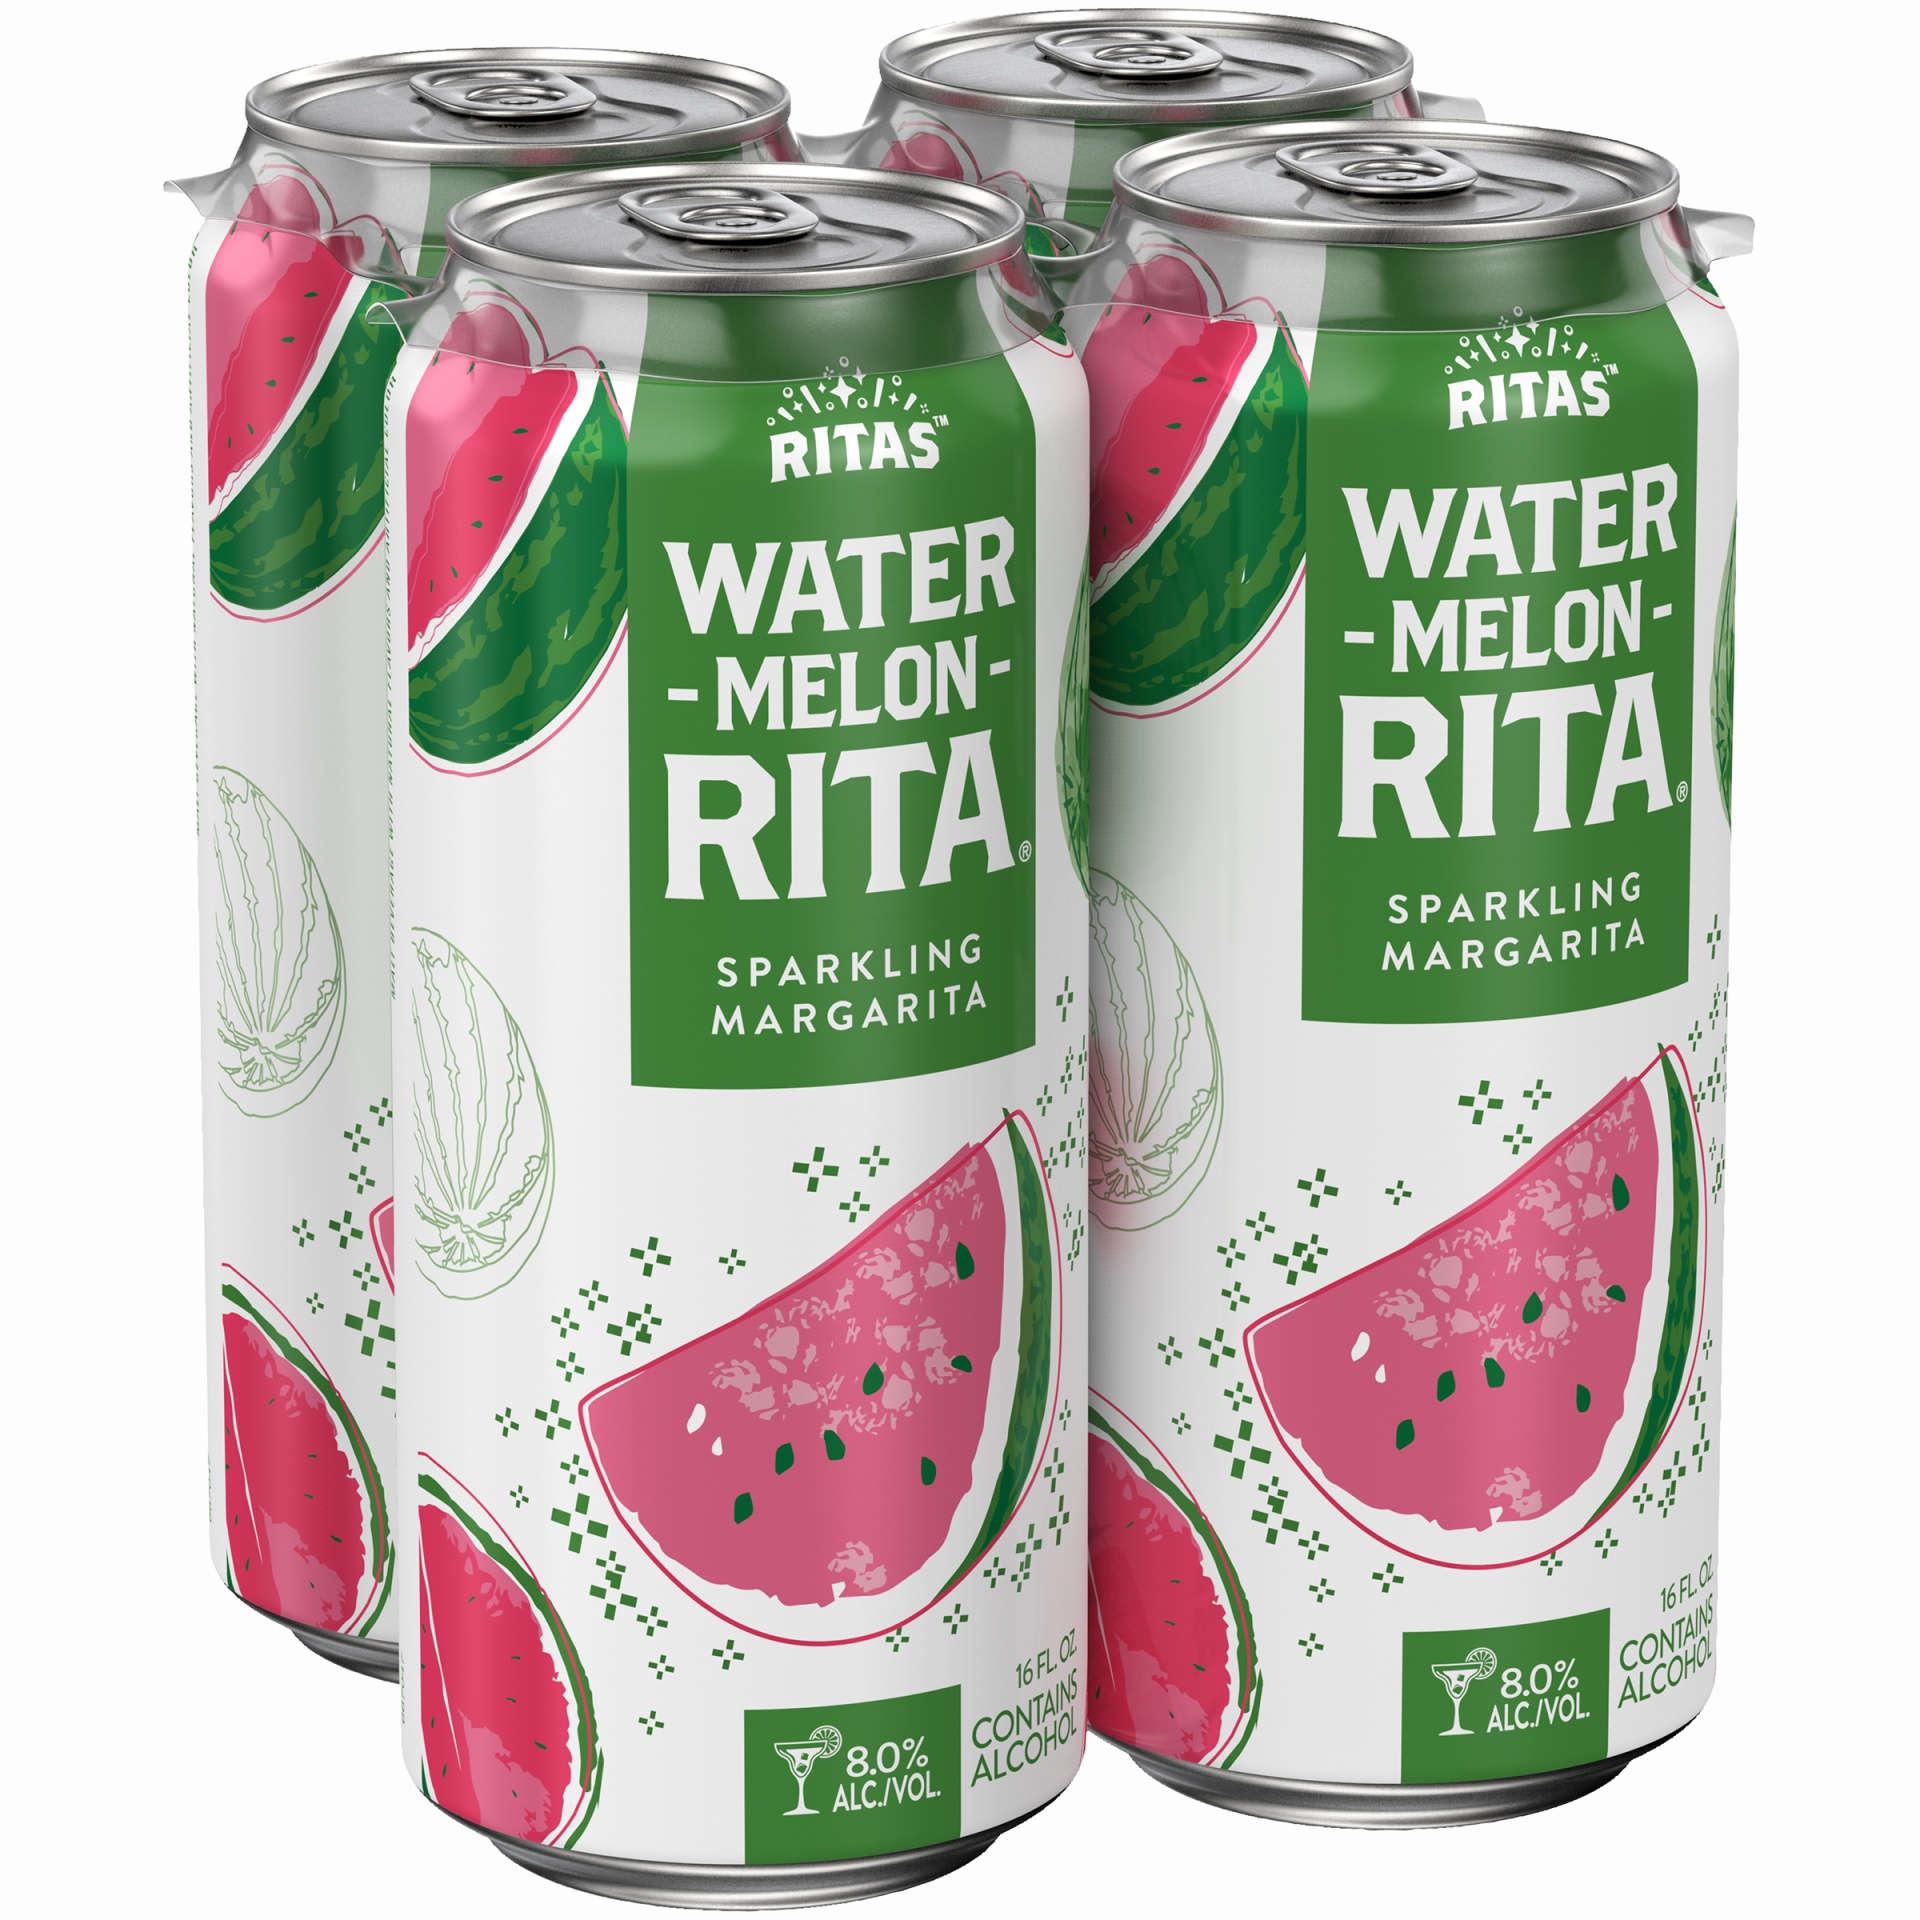 slide 2 of 3, Ritas Water-Melon-Rita Sparkling Margarita, 8% ABV, 16 oz cans